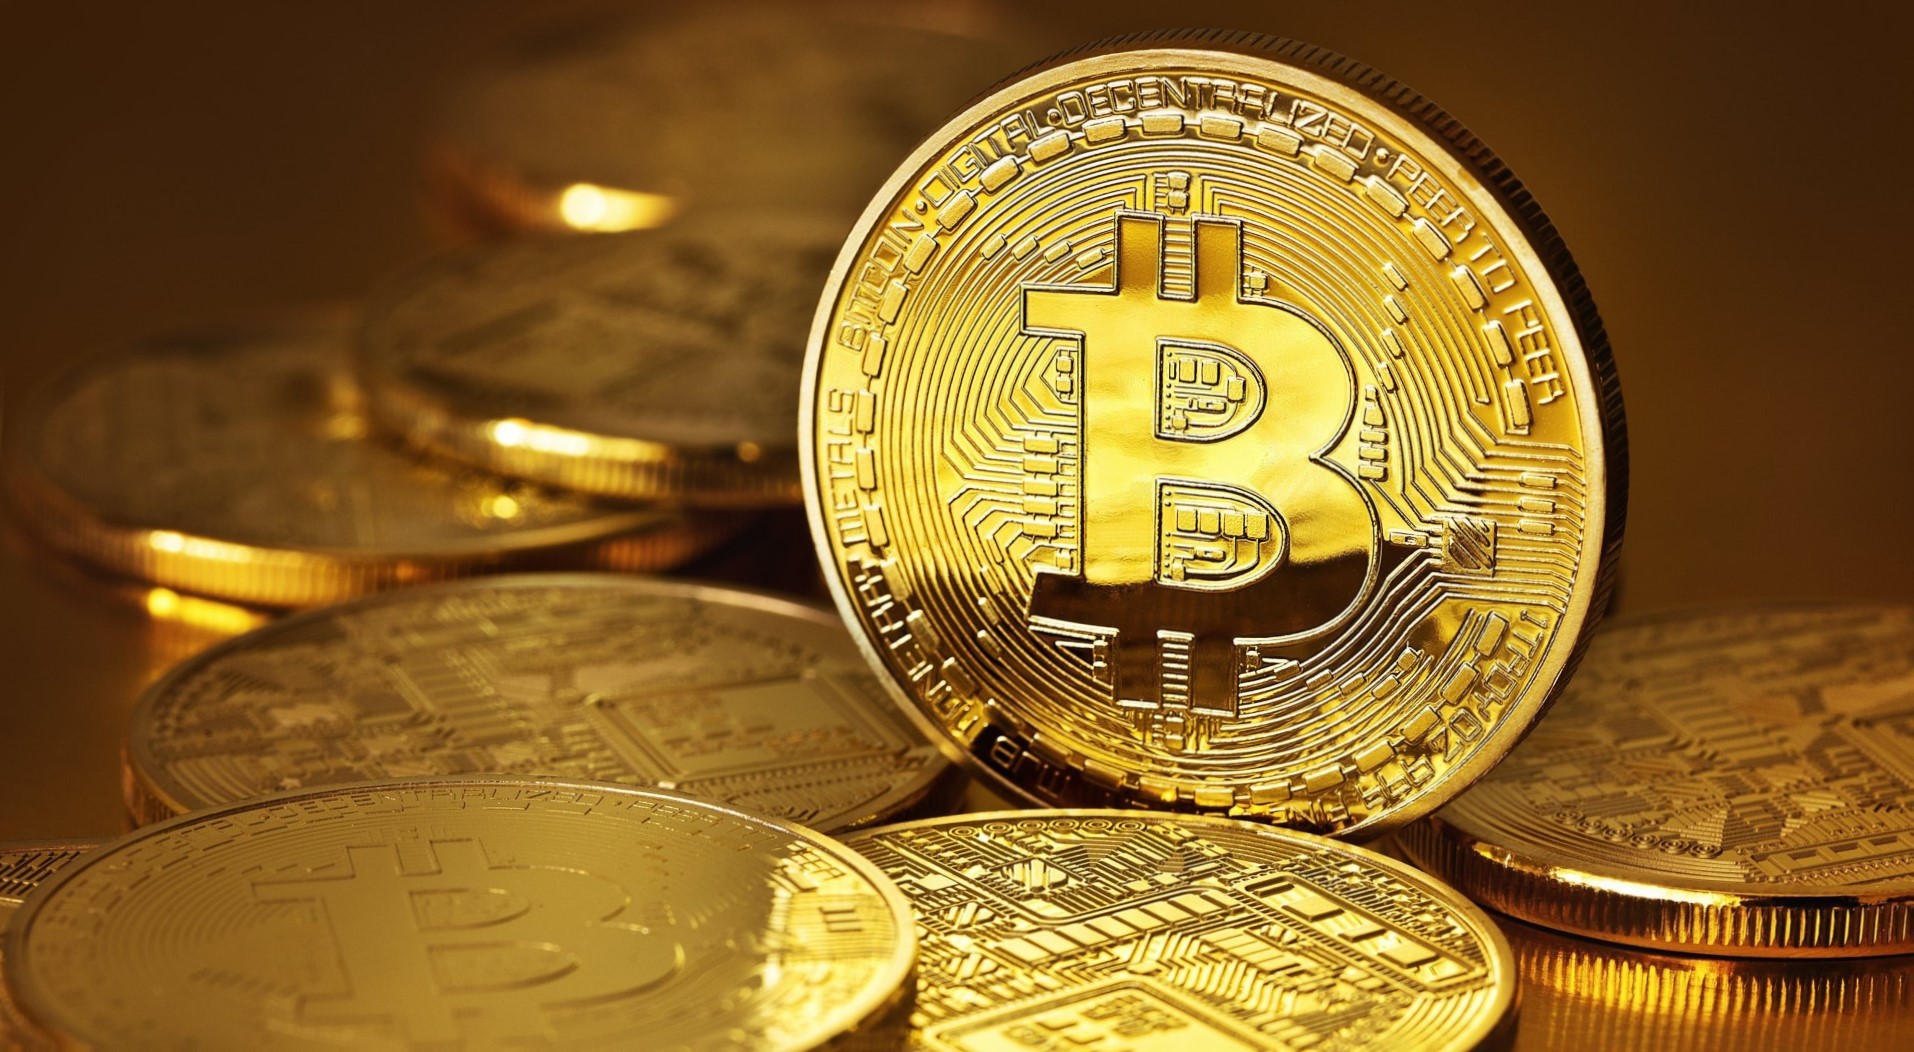 Bitcoin price has risen